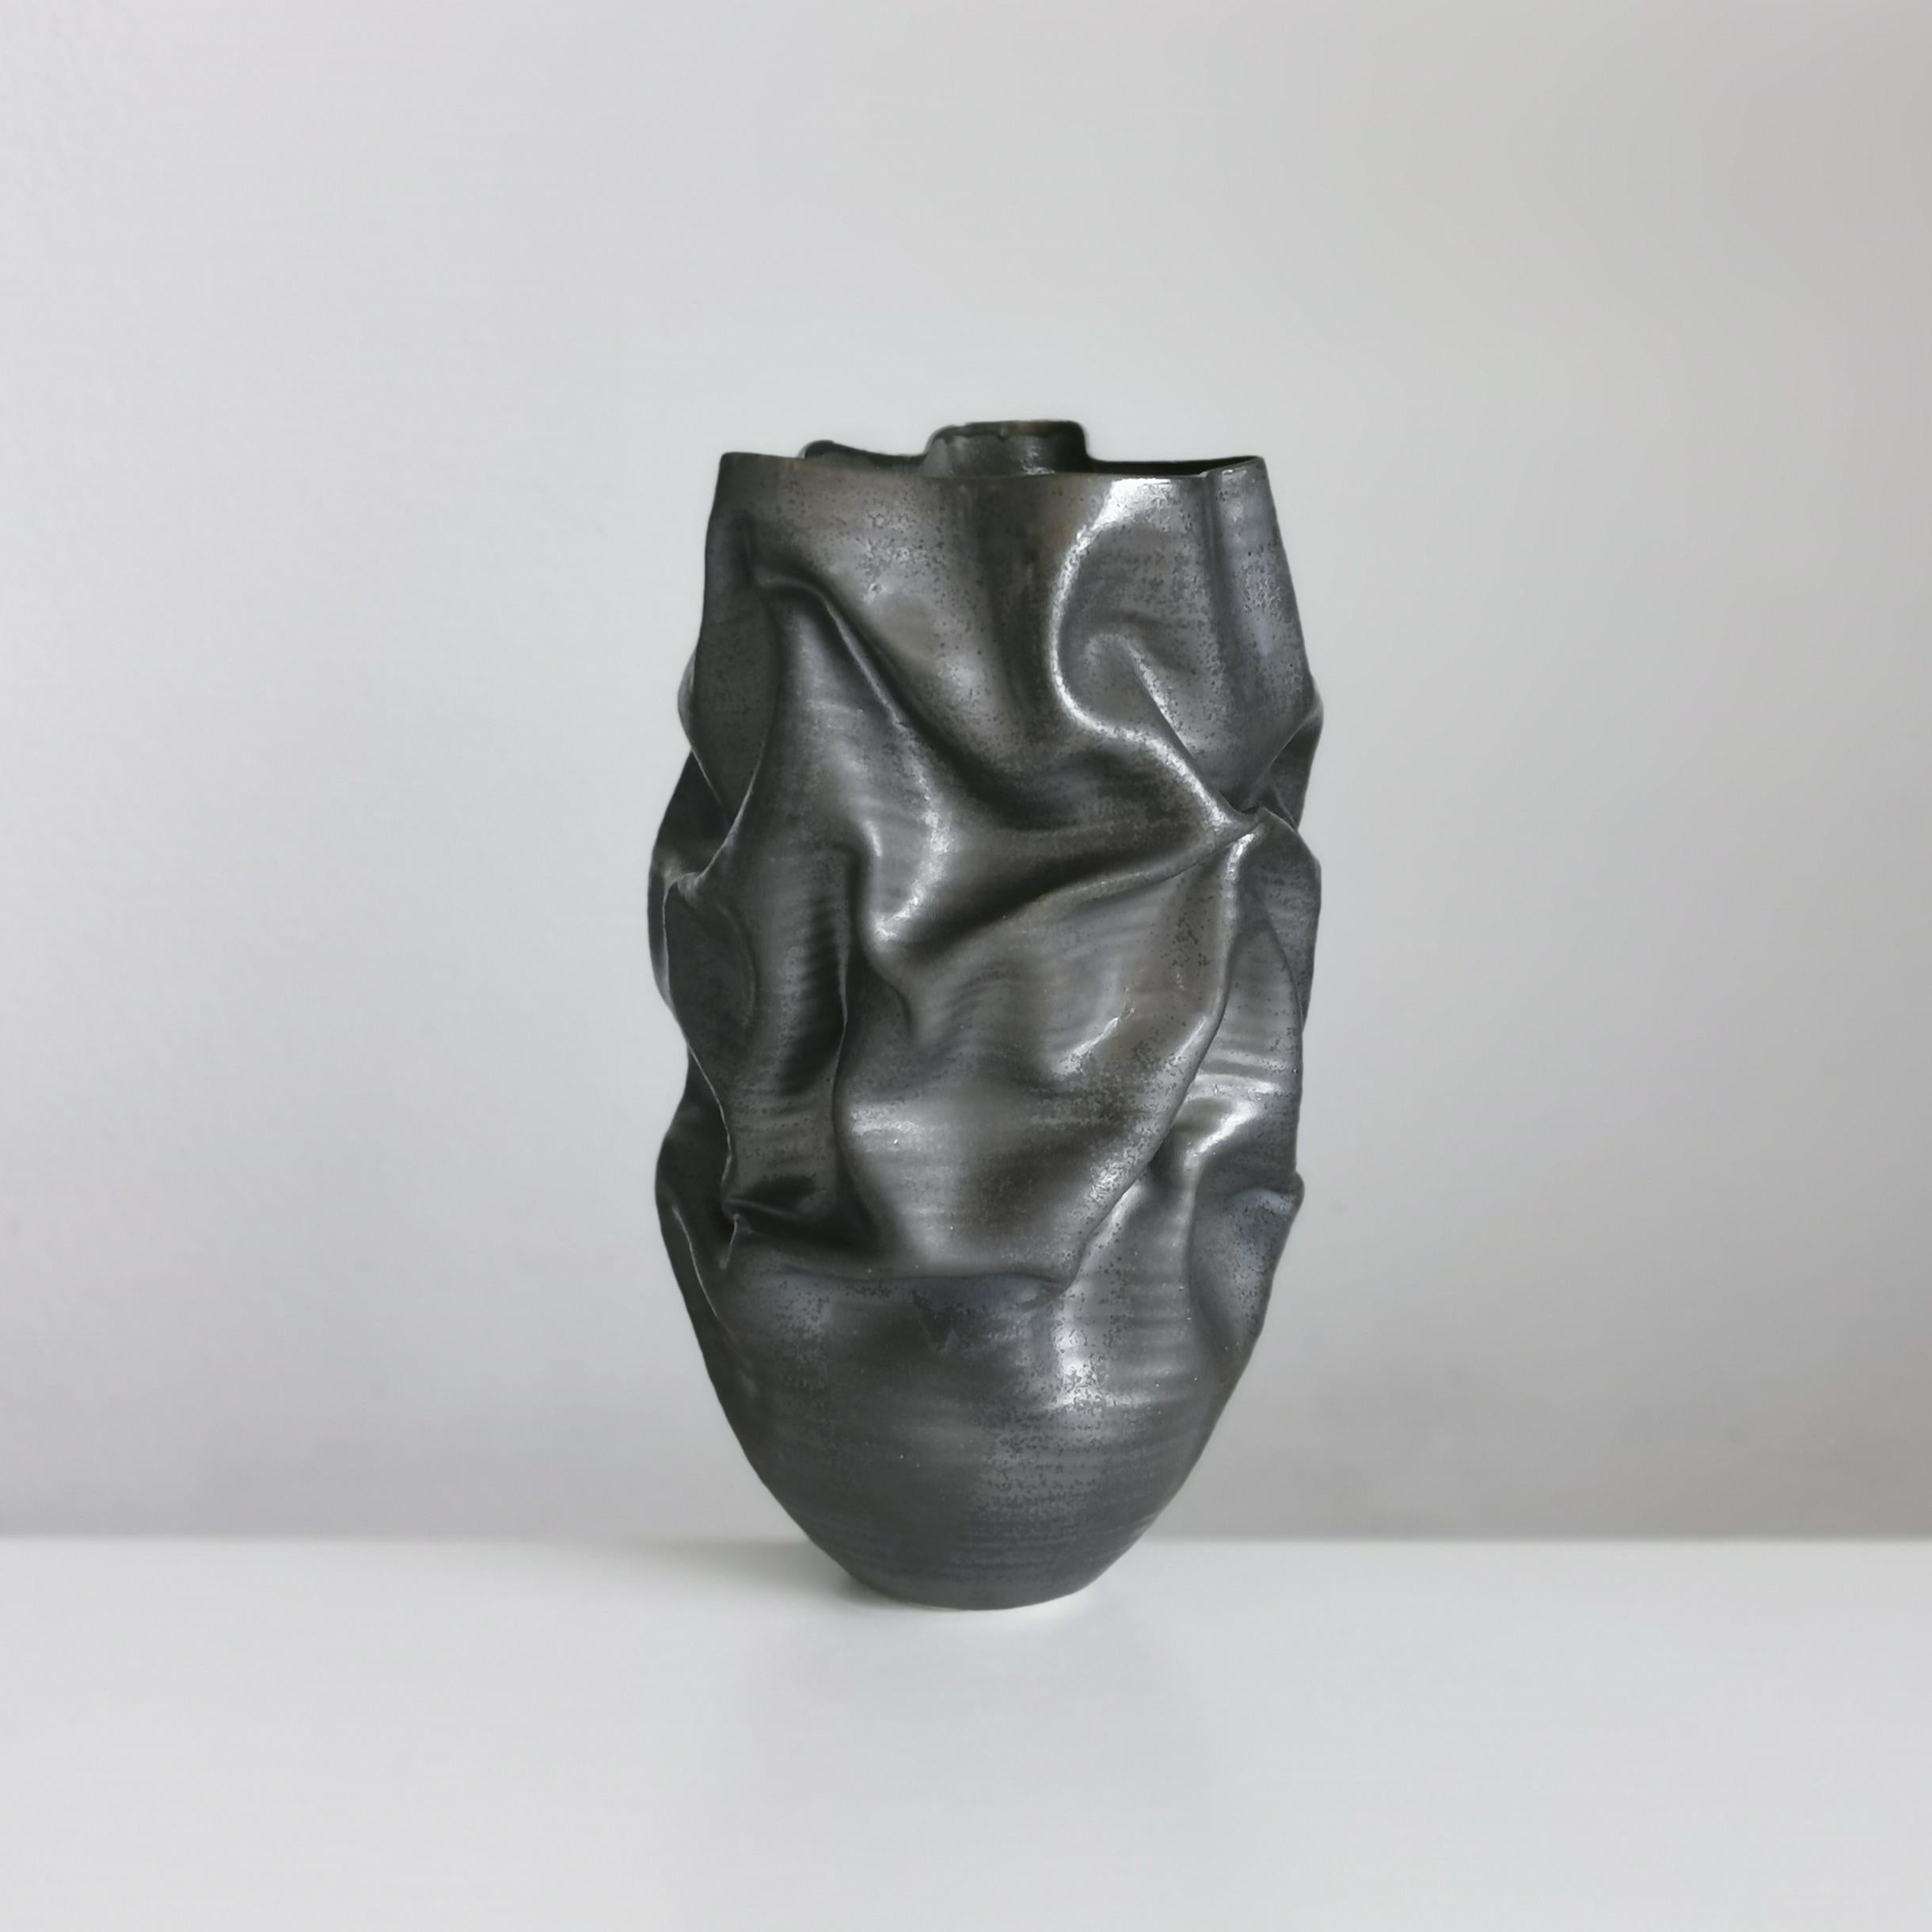 Organic Modern Unique Ceramic Sculpture Vessel N.57, Black Dehydrated Form, Objet d'Art